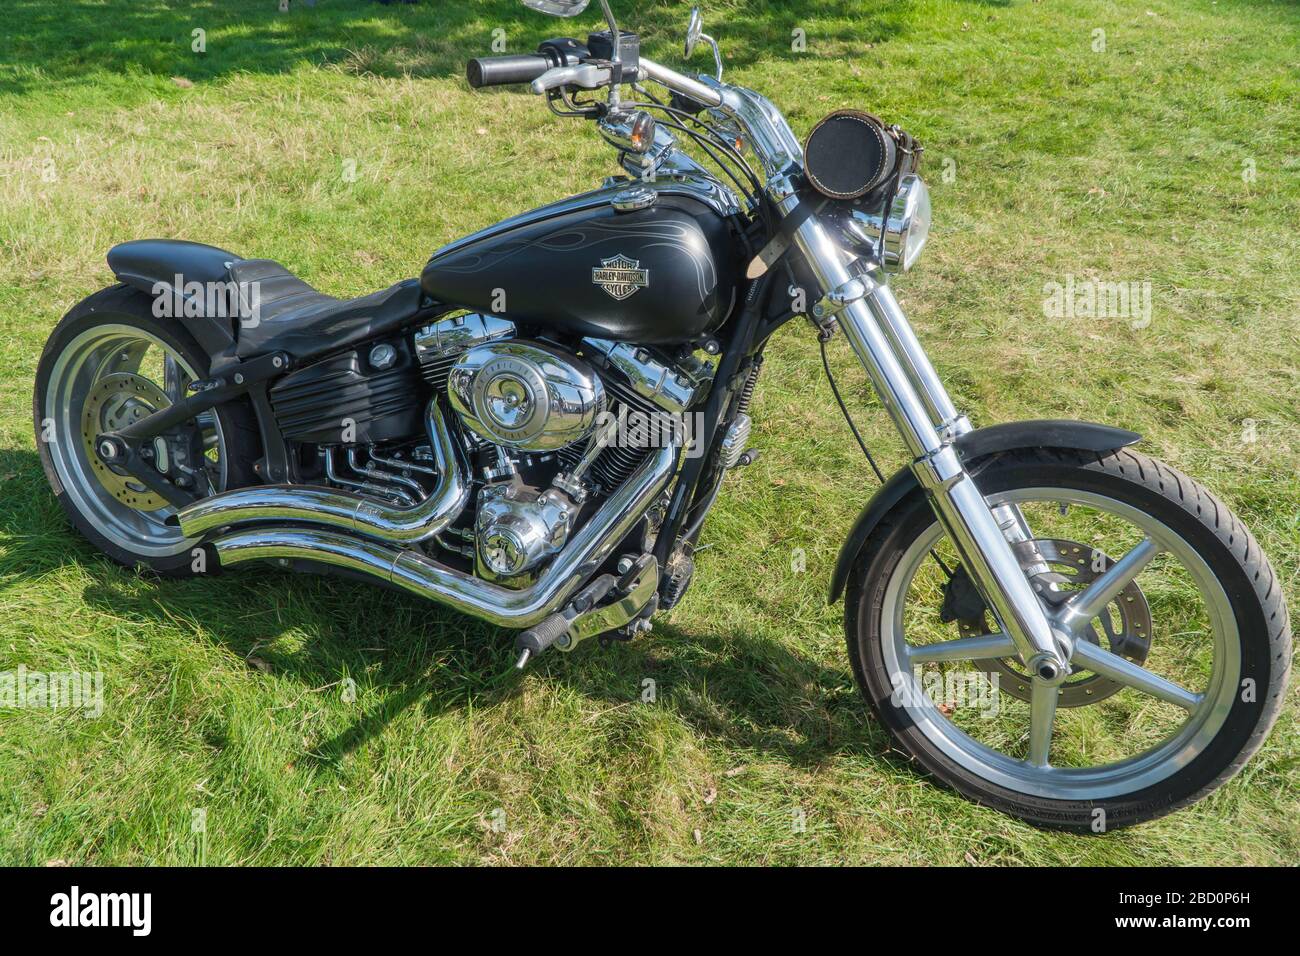 Motocicleta Harley-Davidson negra y cromada. Foto de stock